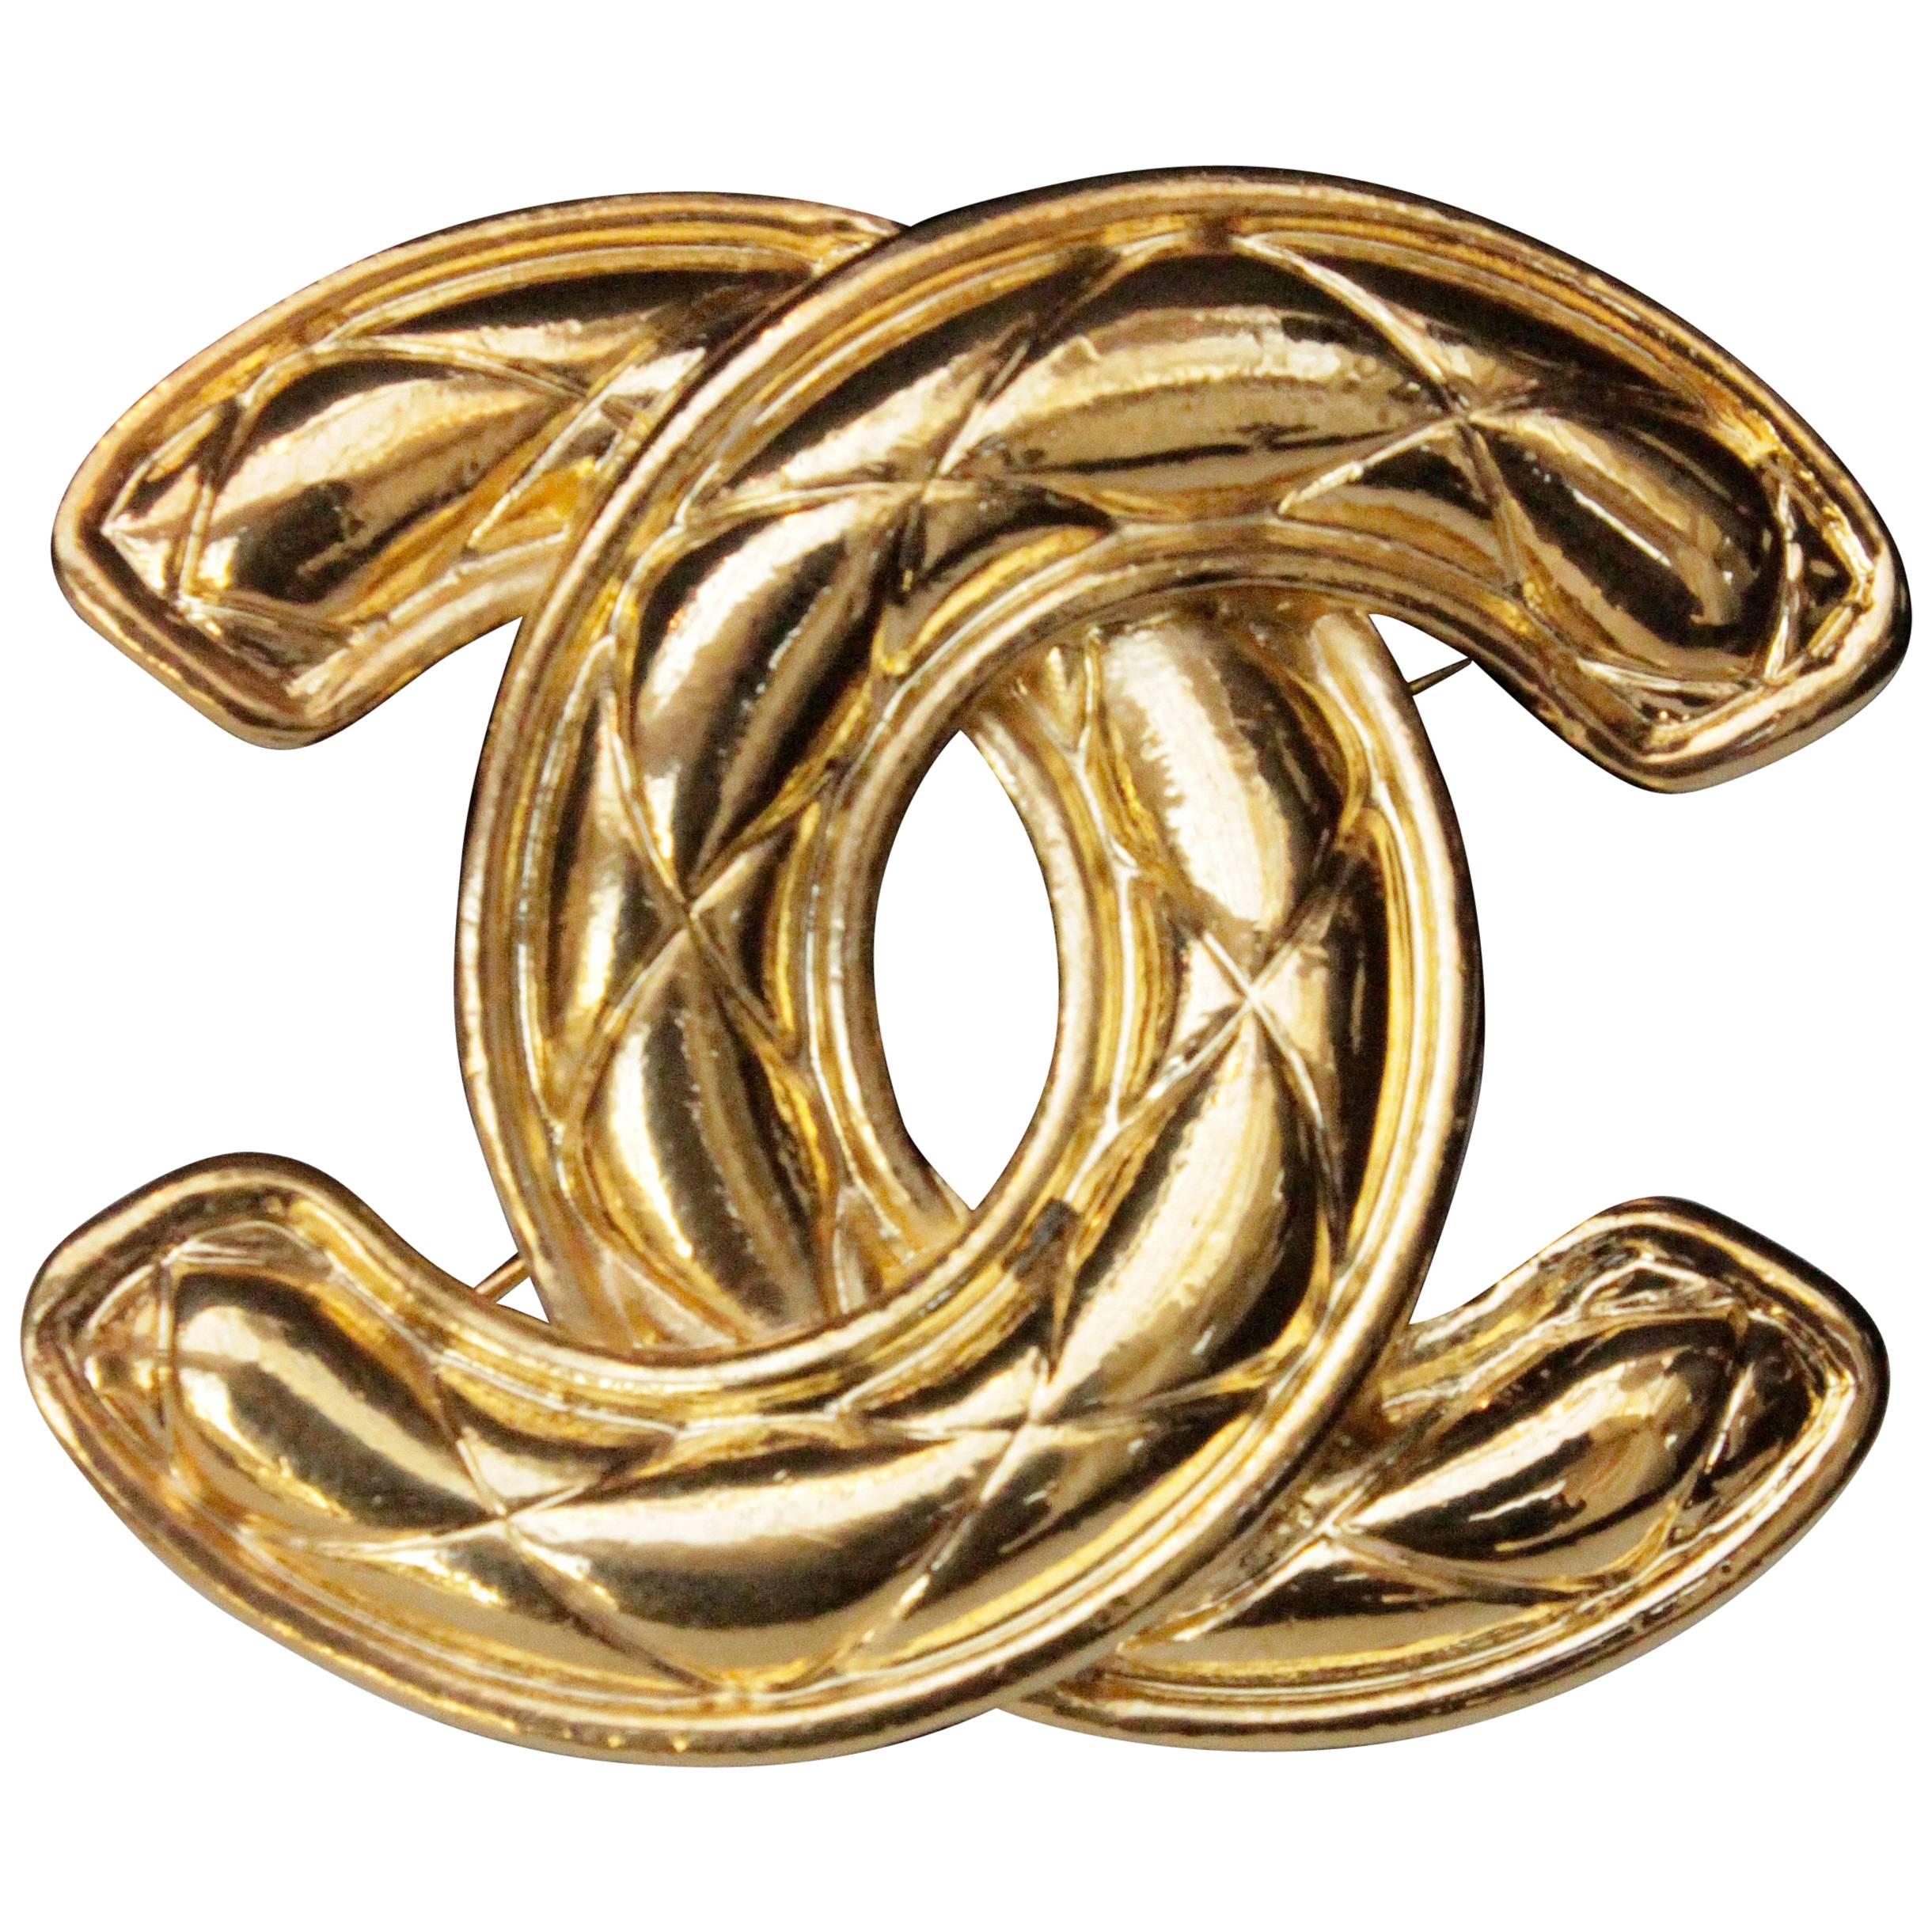 1990s Chanel gilded metal brooch